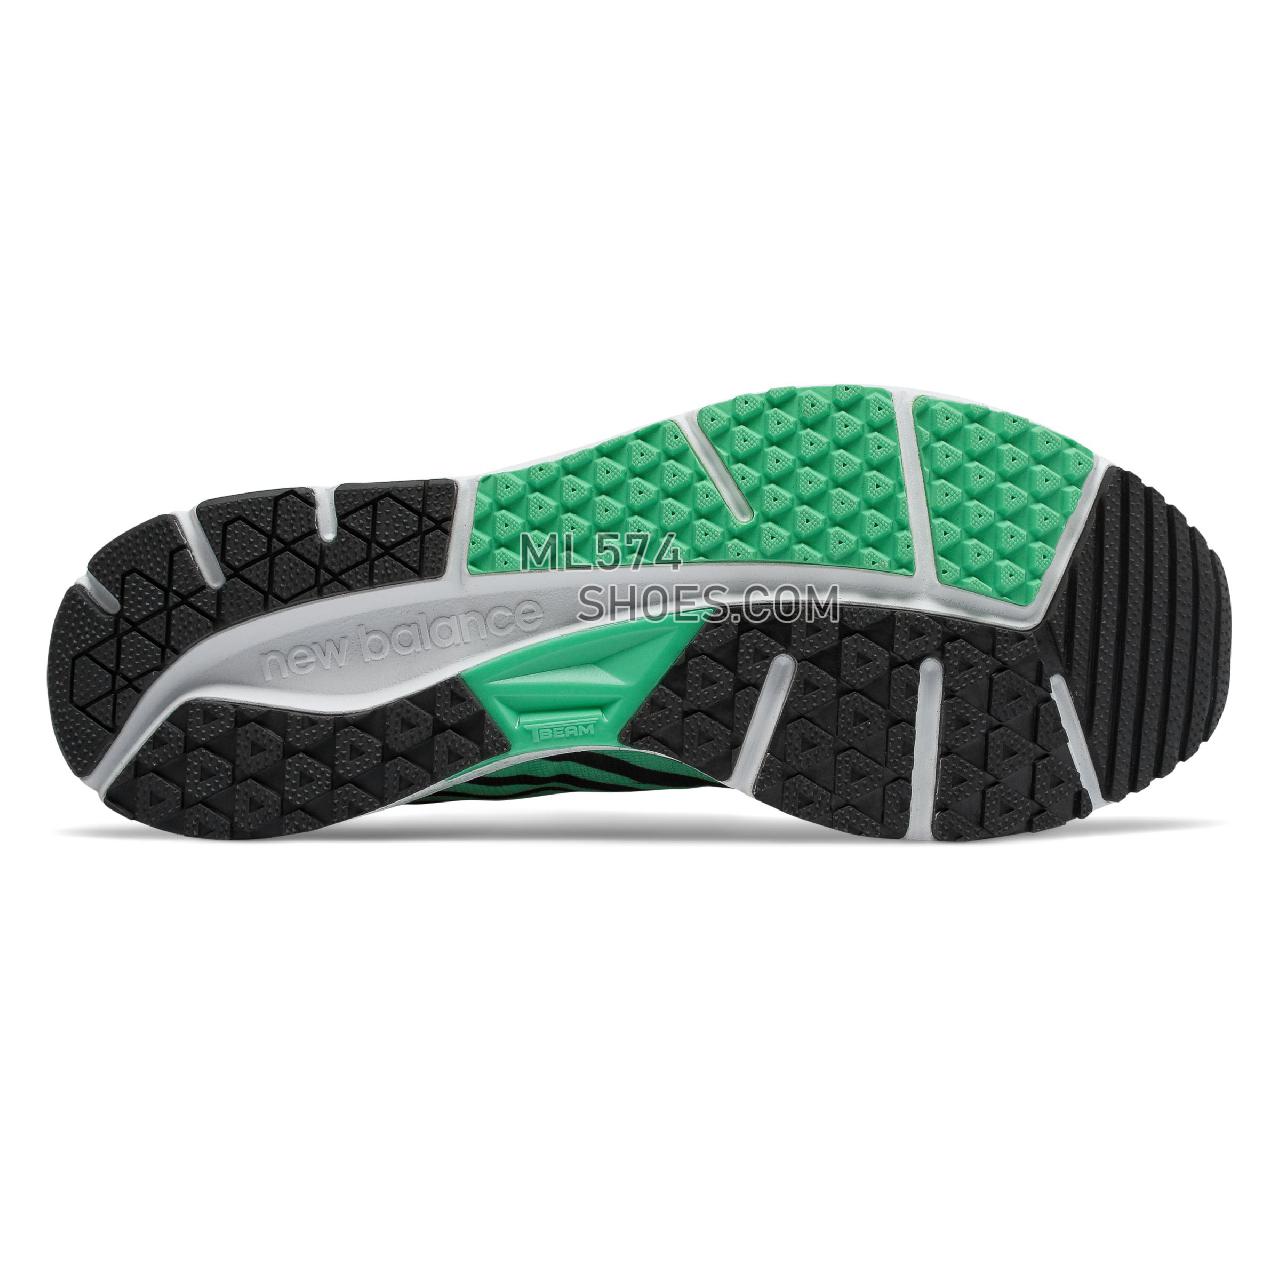 New Balance 1500v5 - Men's Race Running - Black with Neon Emerald - M1500BG5